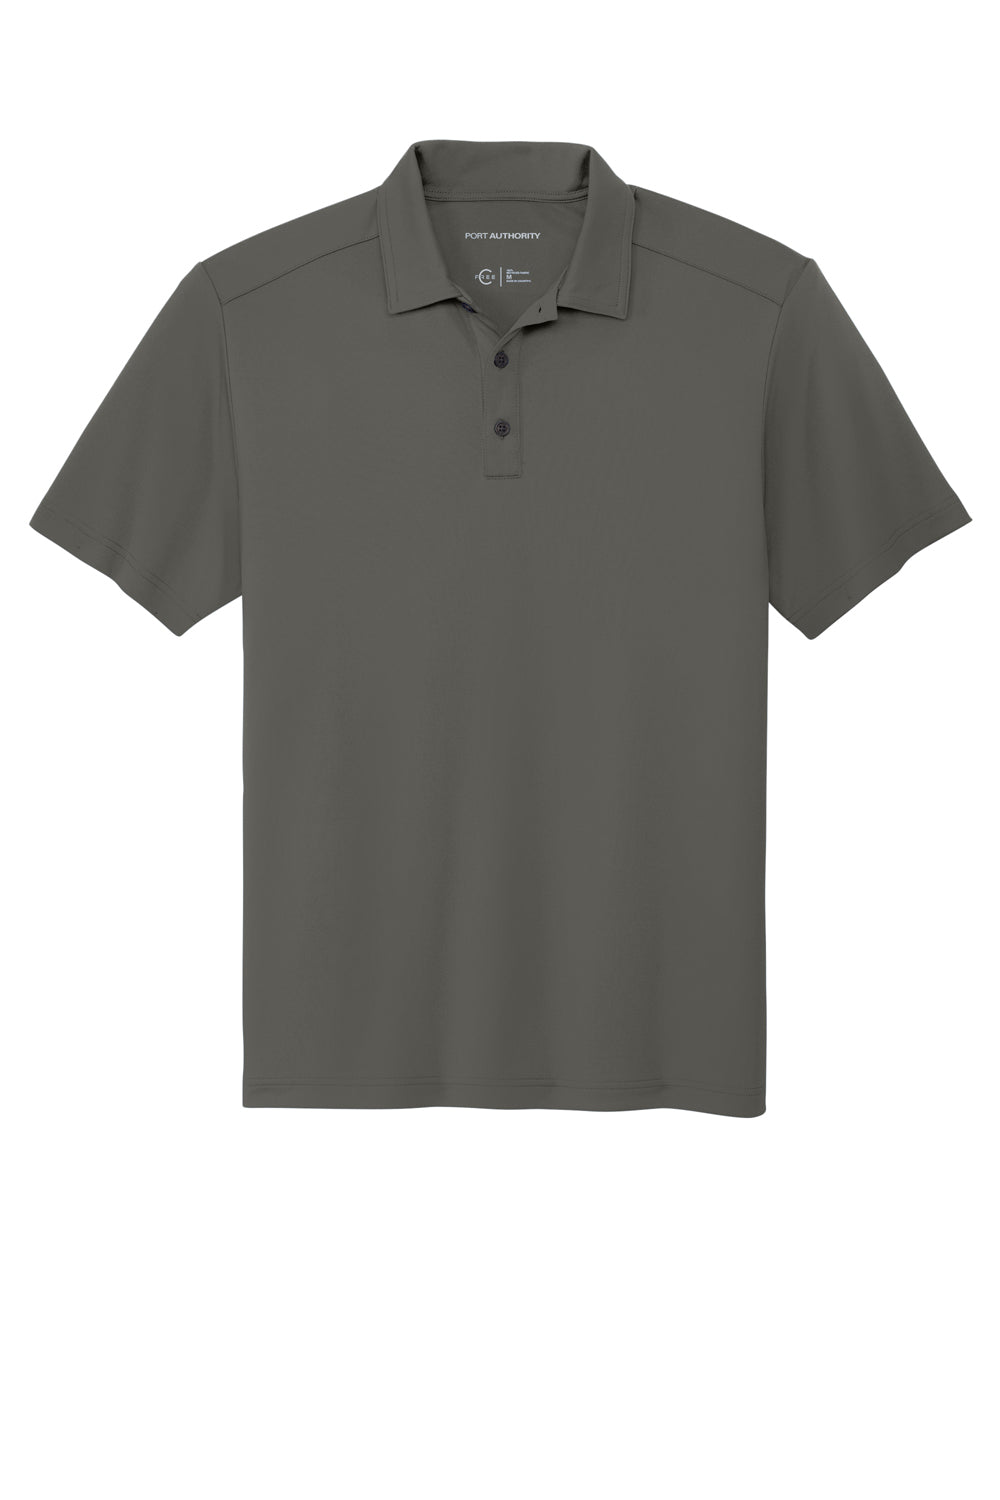 Port Authority K864 C-Free Performance Short Sleeve Polo Shirt Steel Grey Flat Front